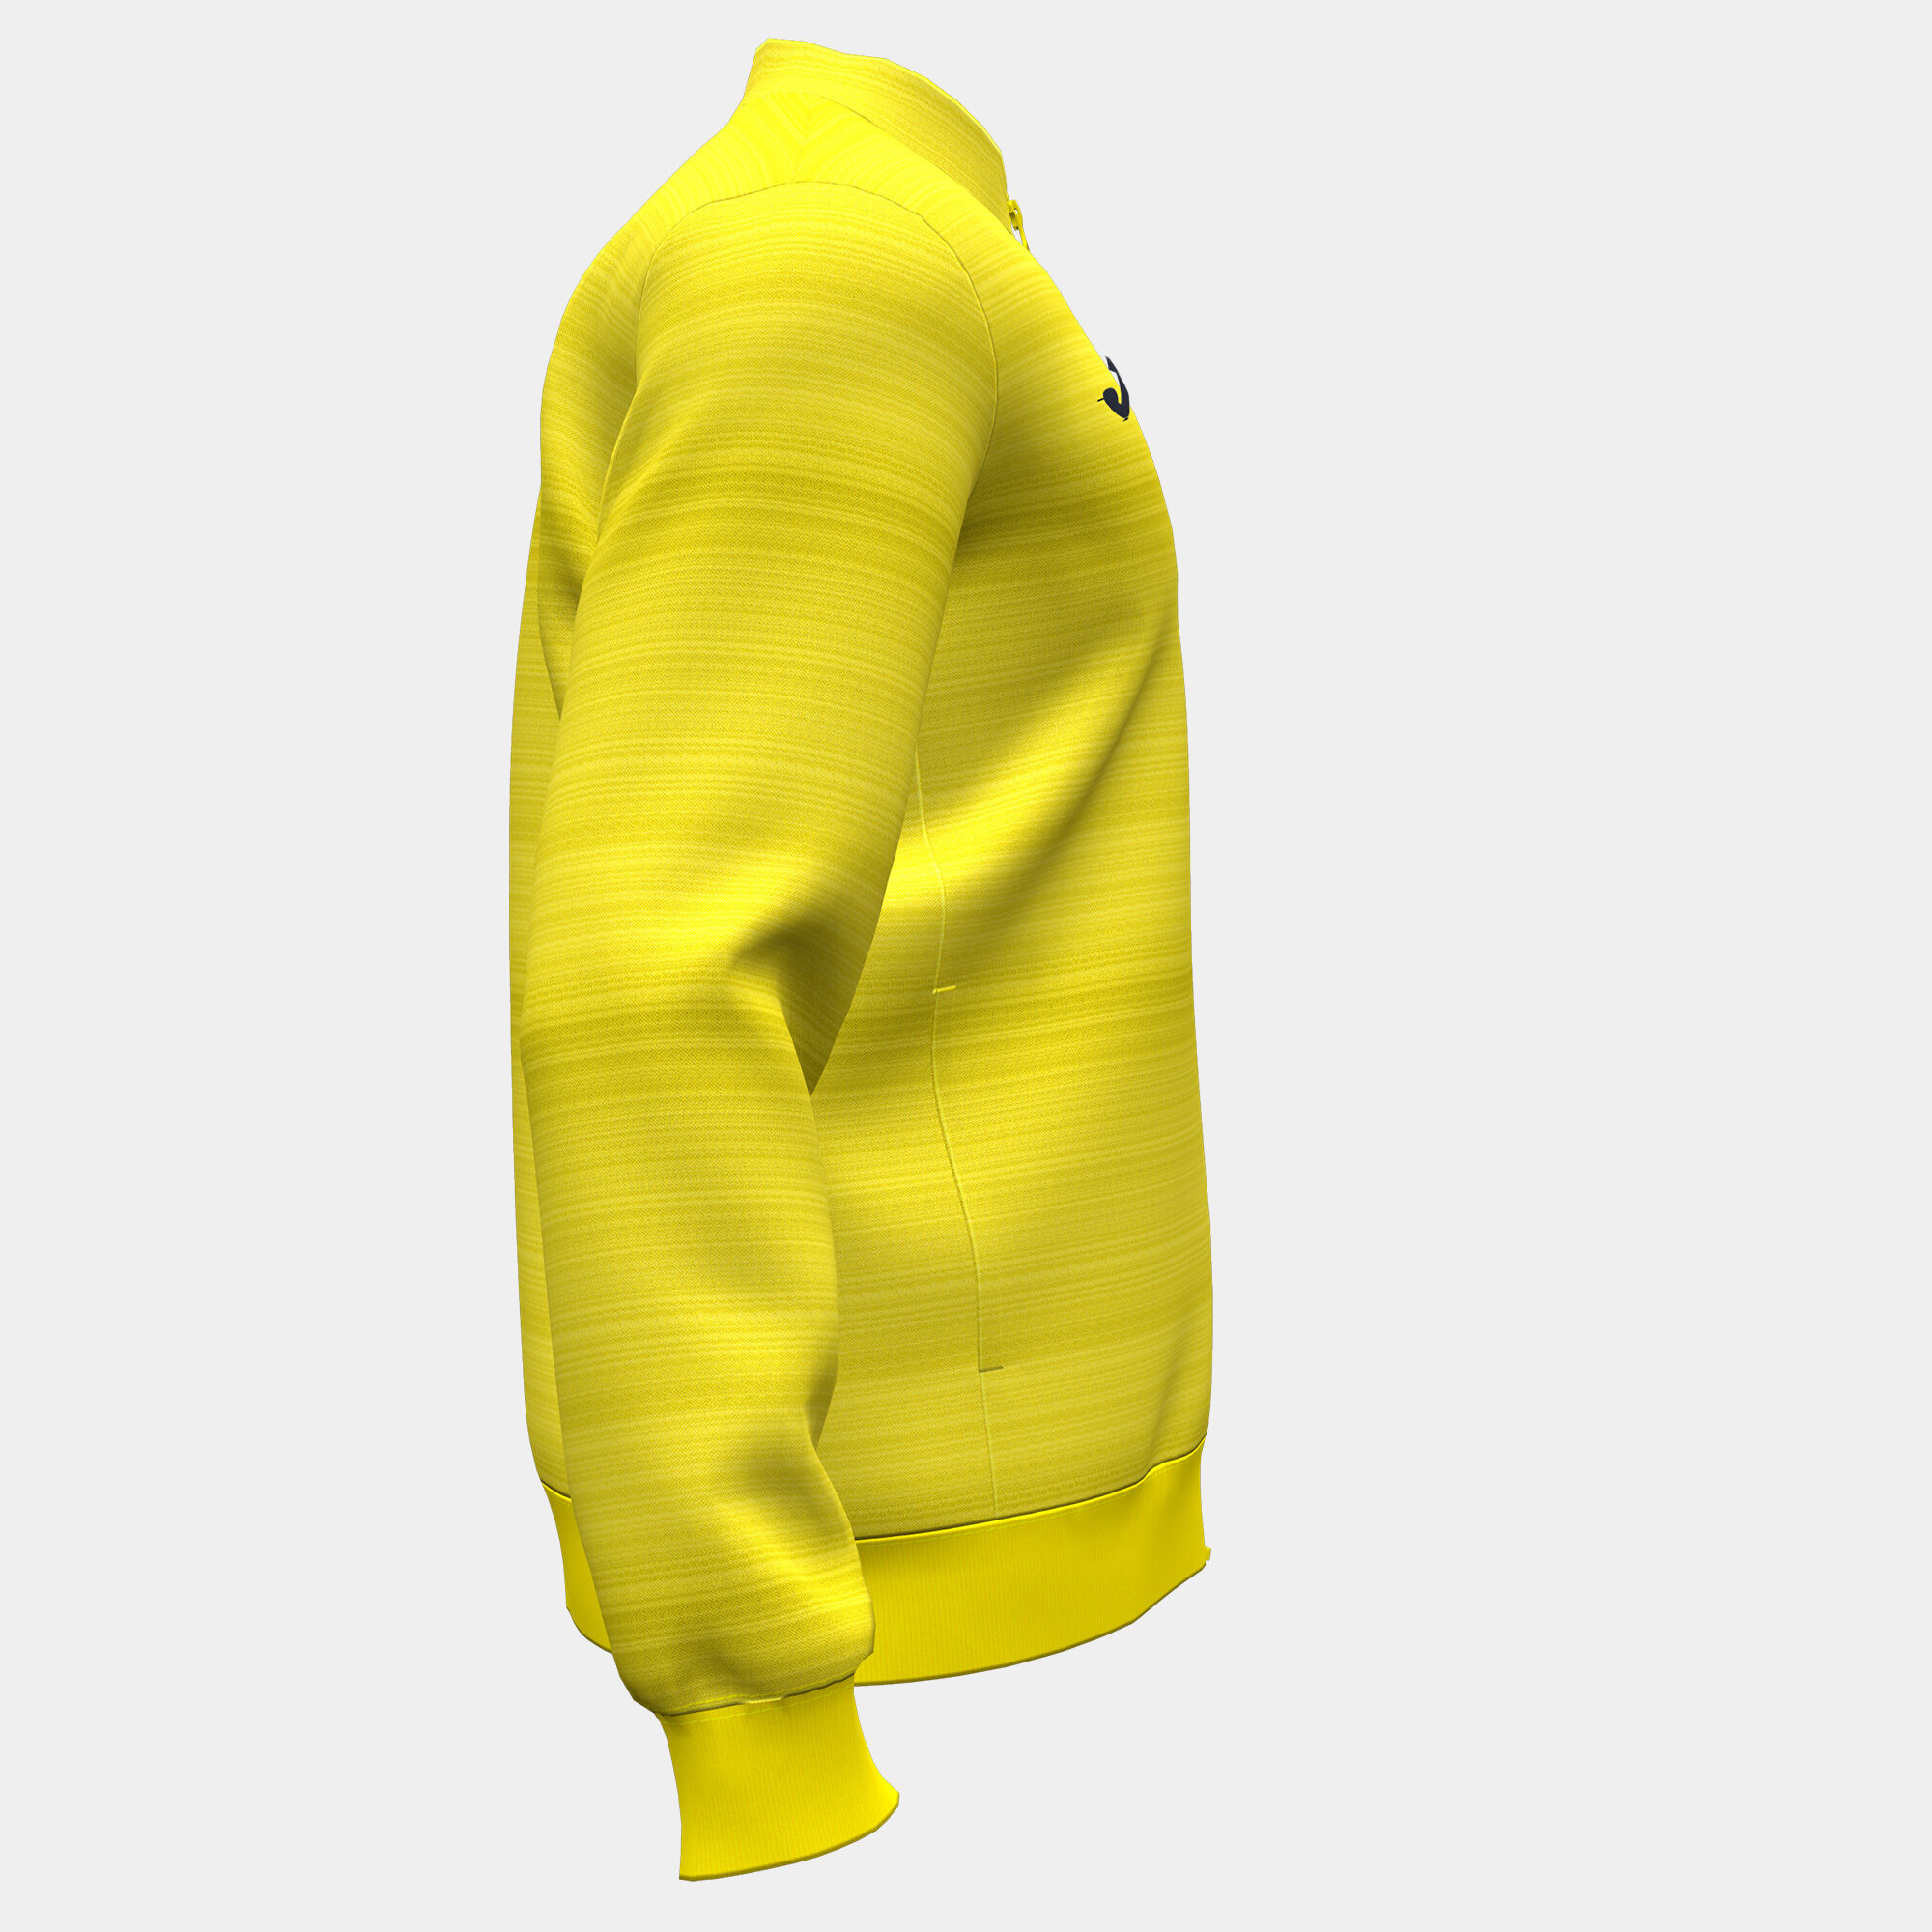 Jachetă bărbaȚi Grafity III galben